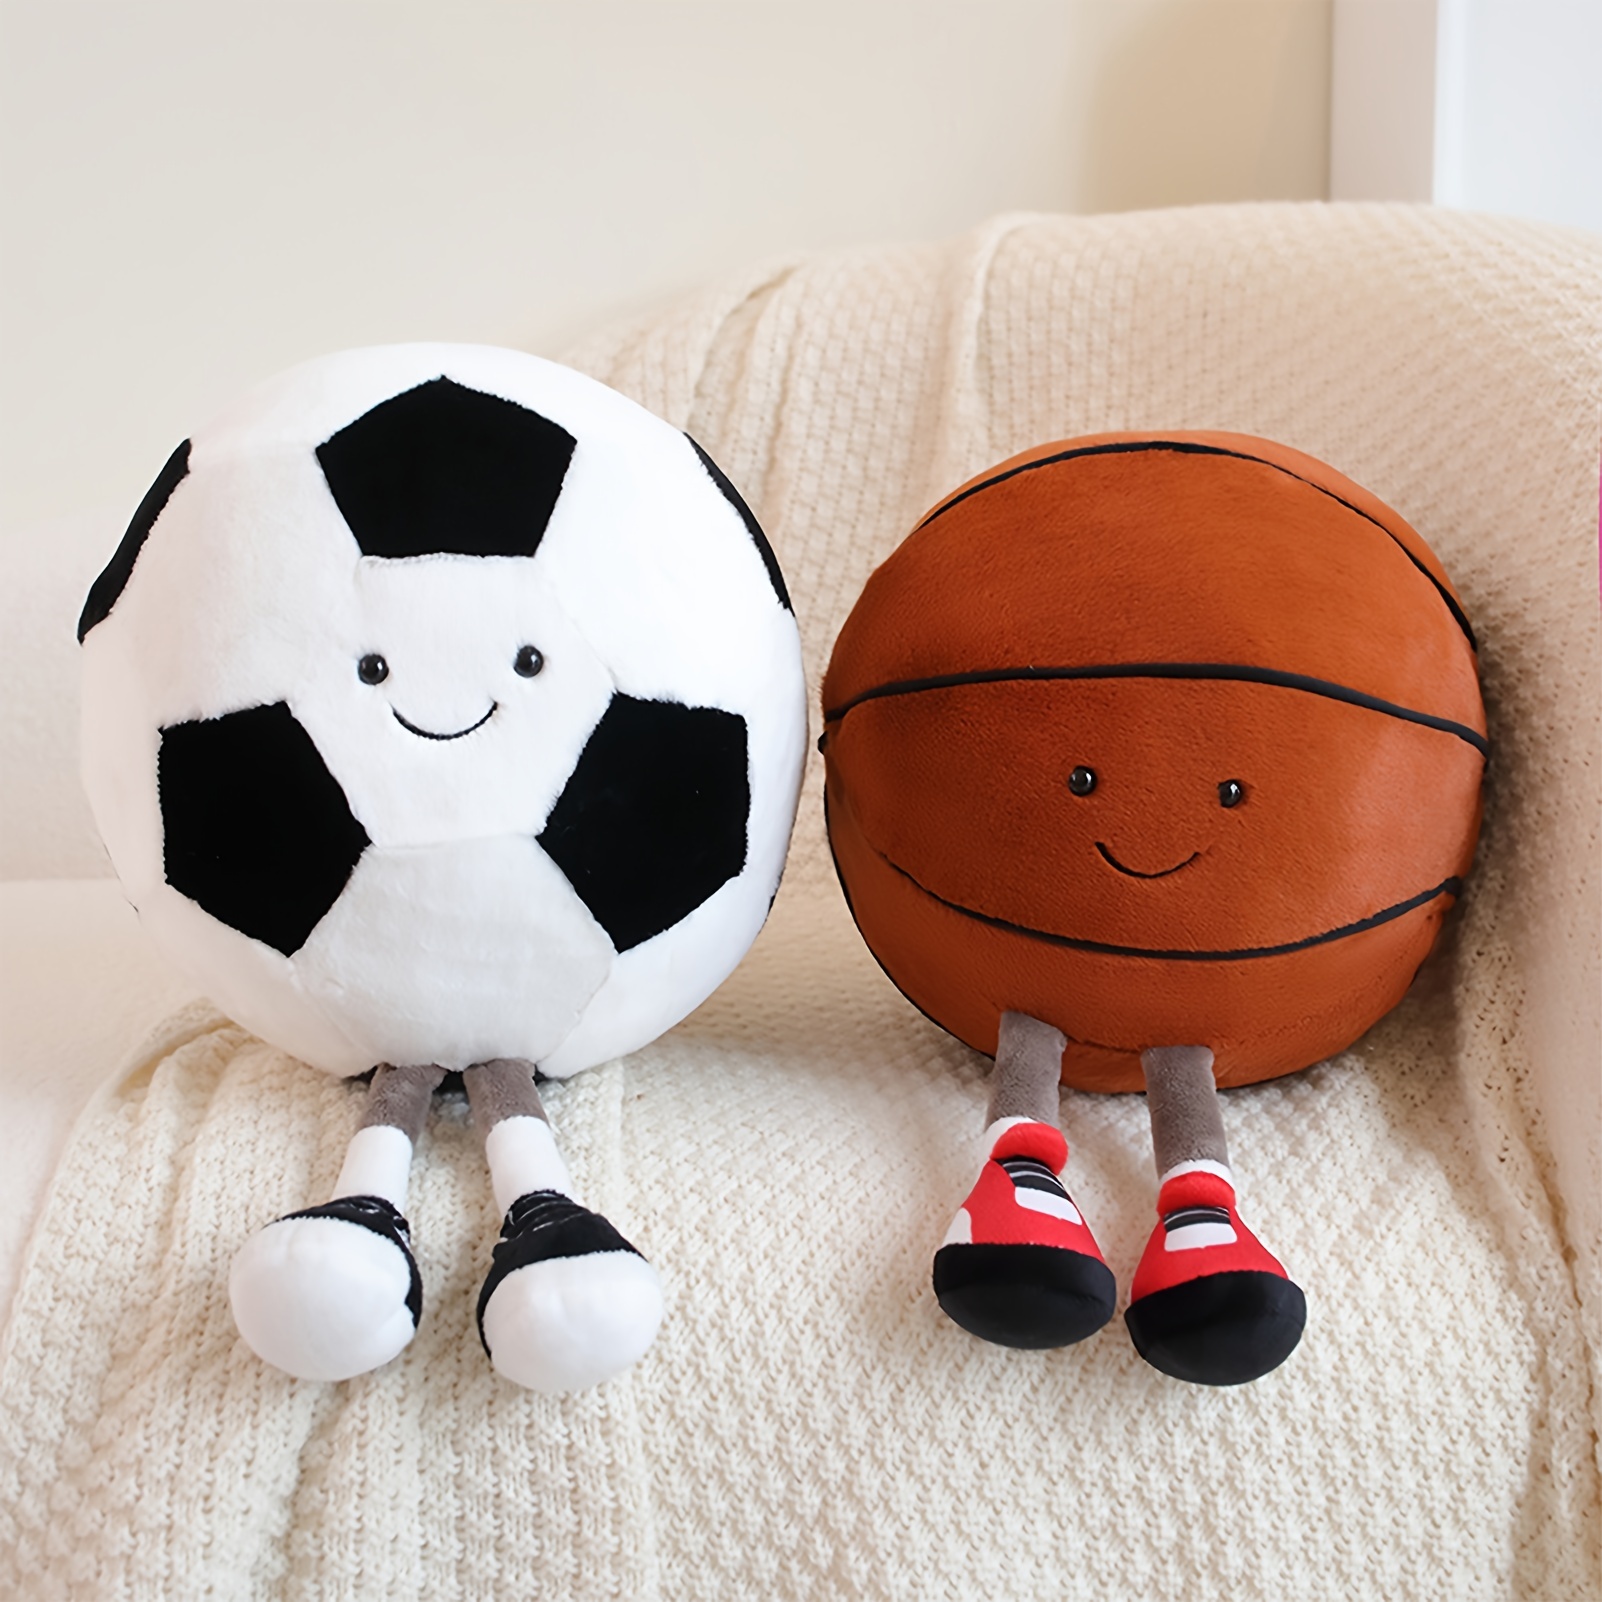 Juguetes para niños de fútbol - Pelota recargable de 2 y pelota